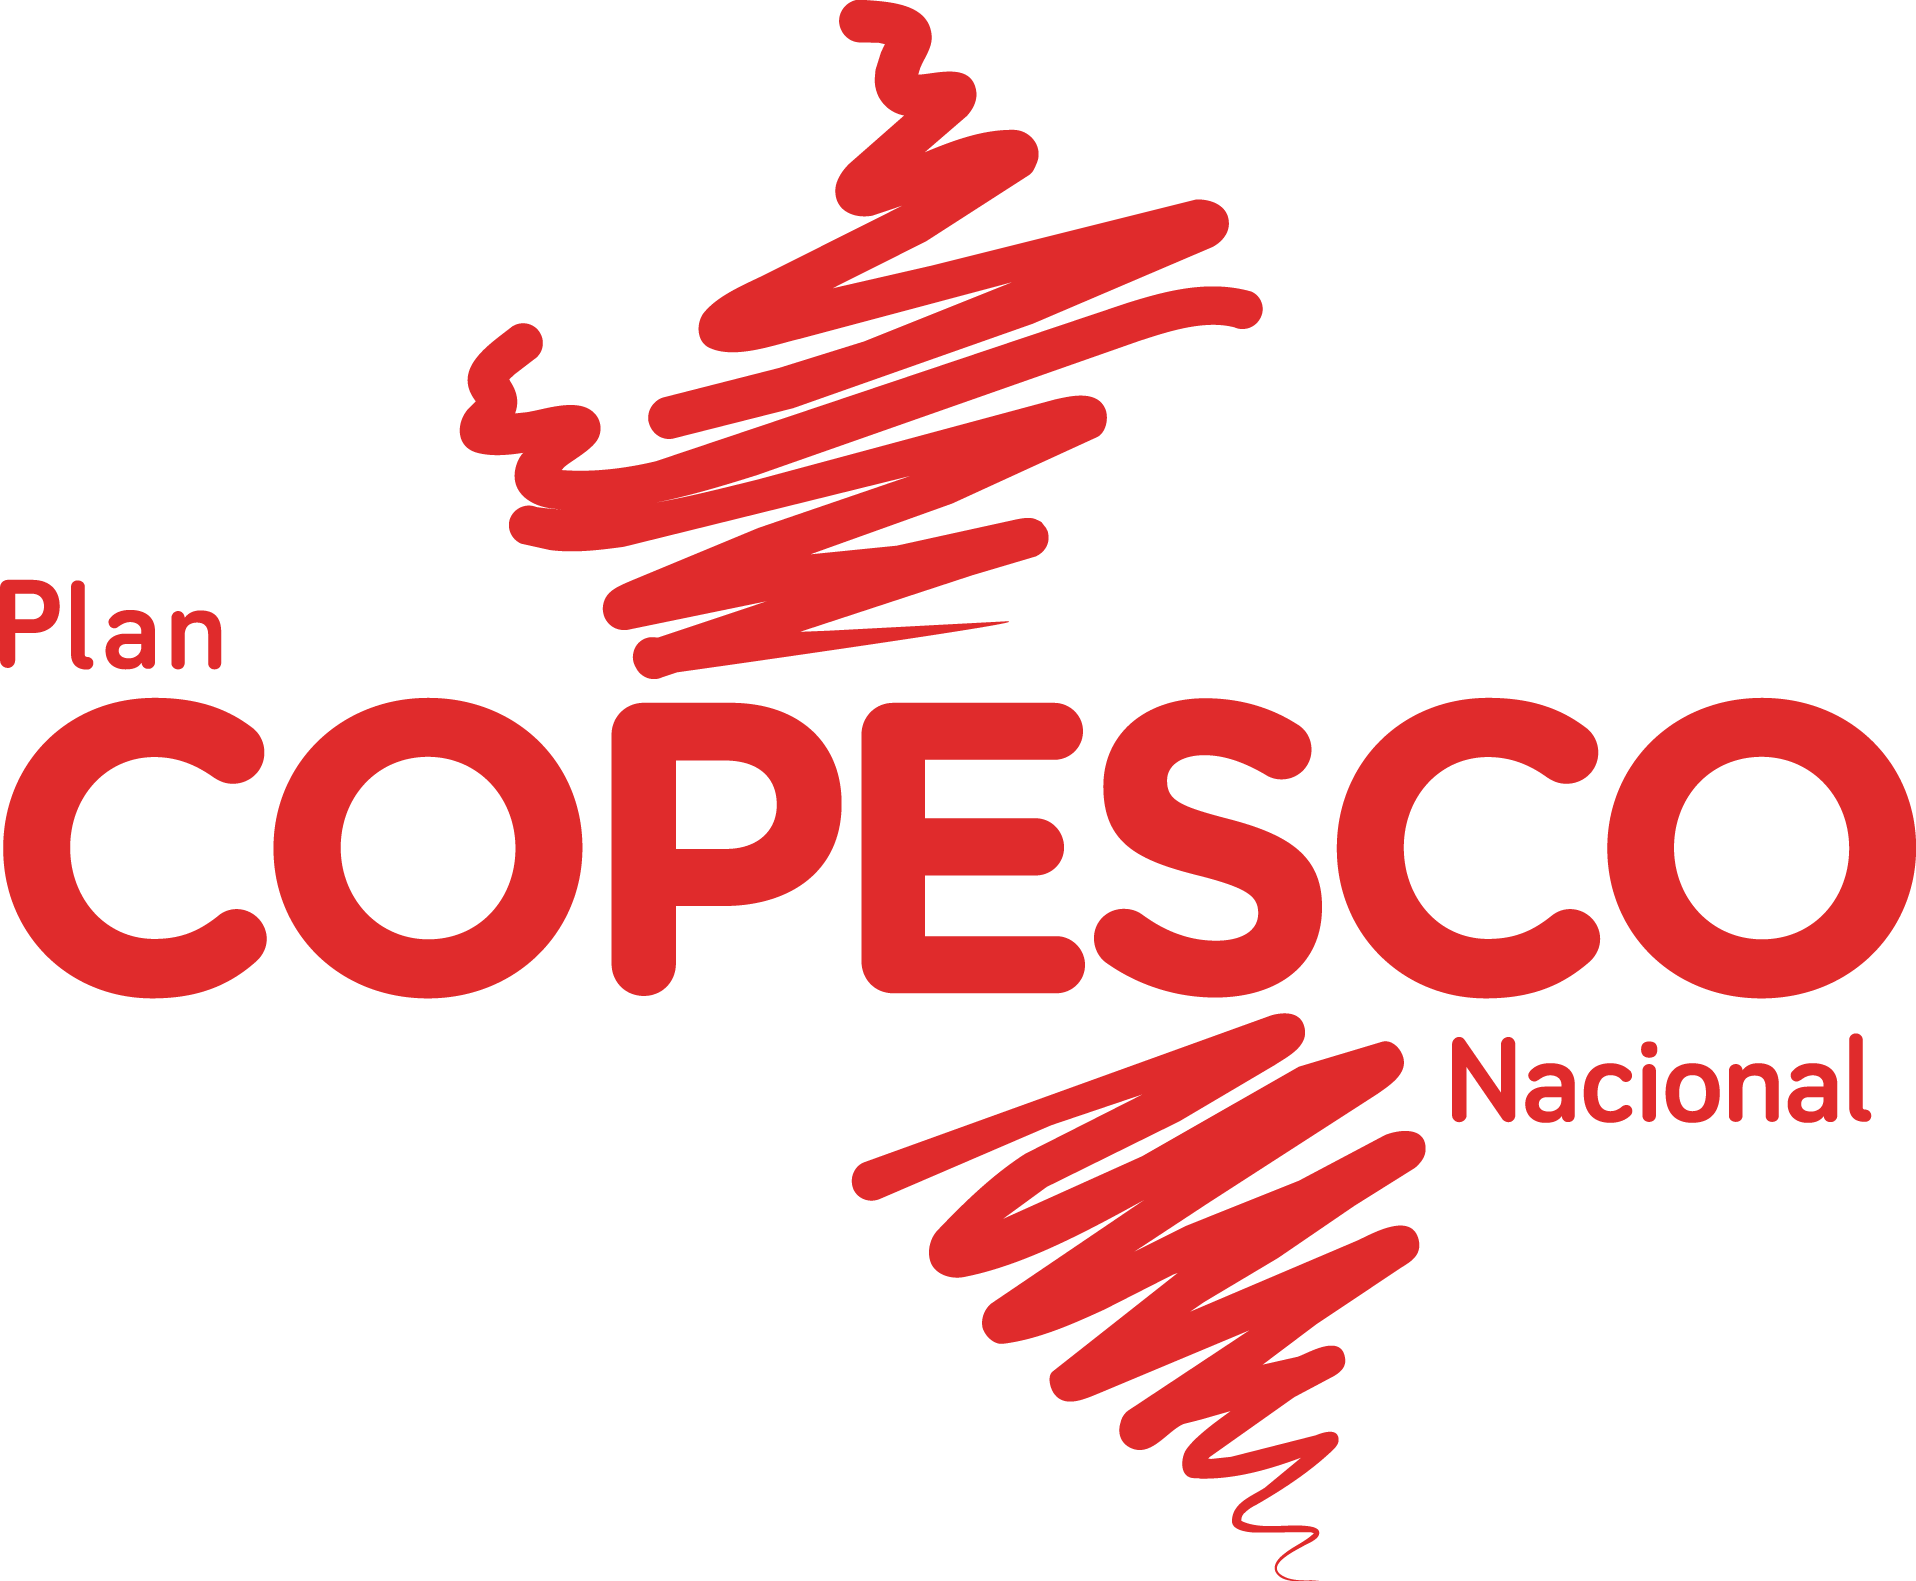 Plan COPESCO